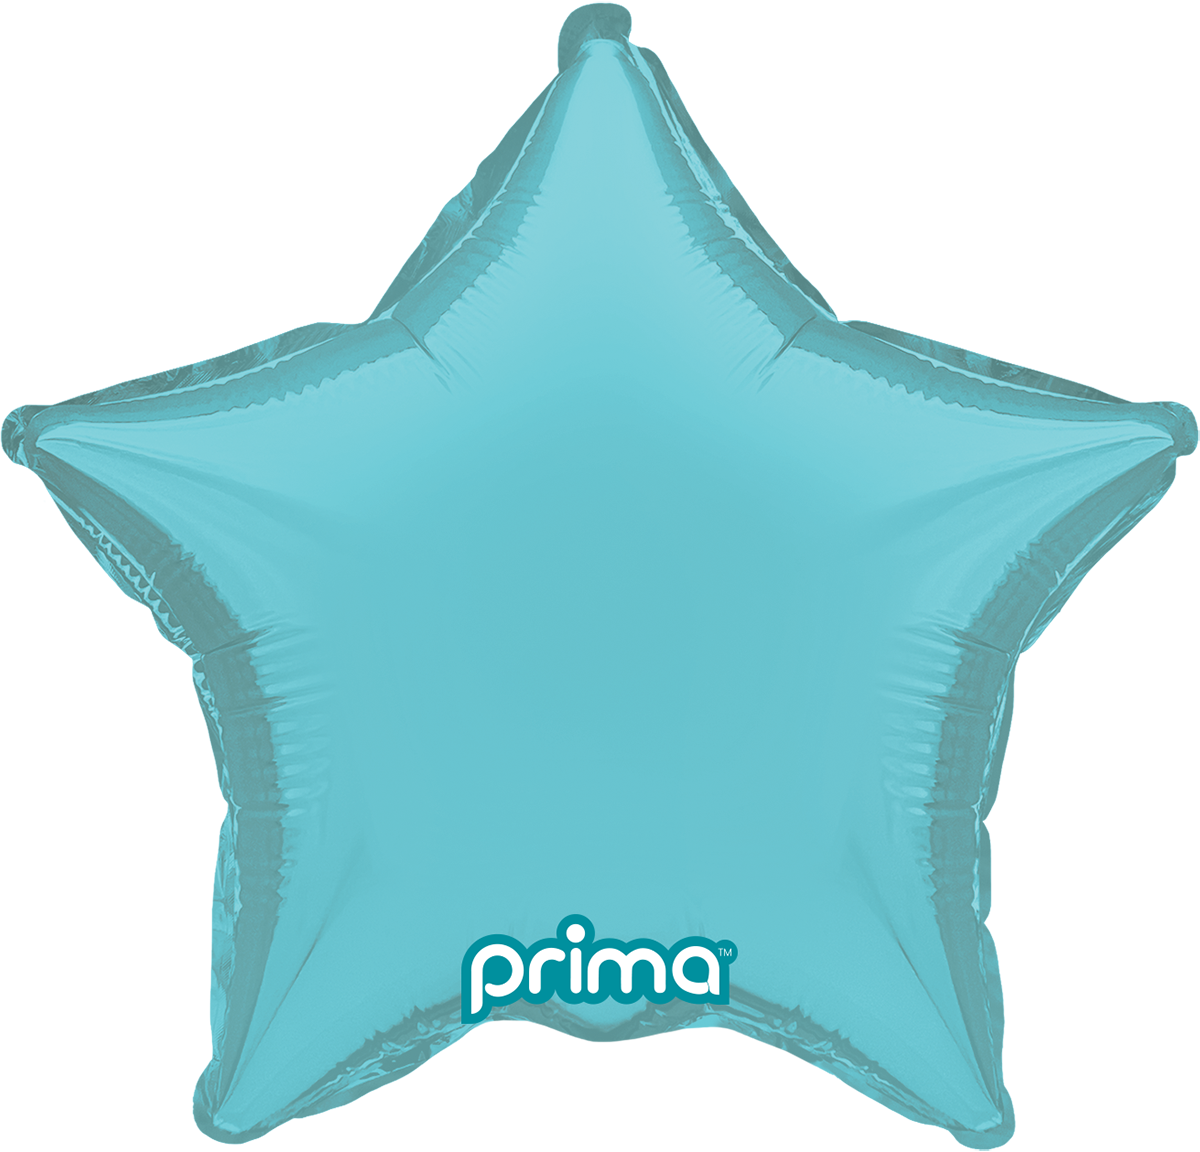 Prima 9" Light Blue Star Balloon 6ct